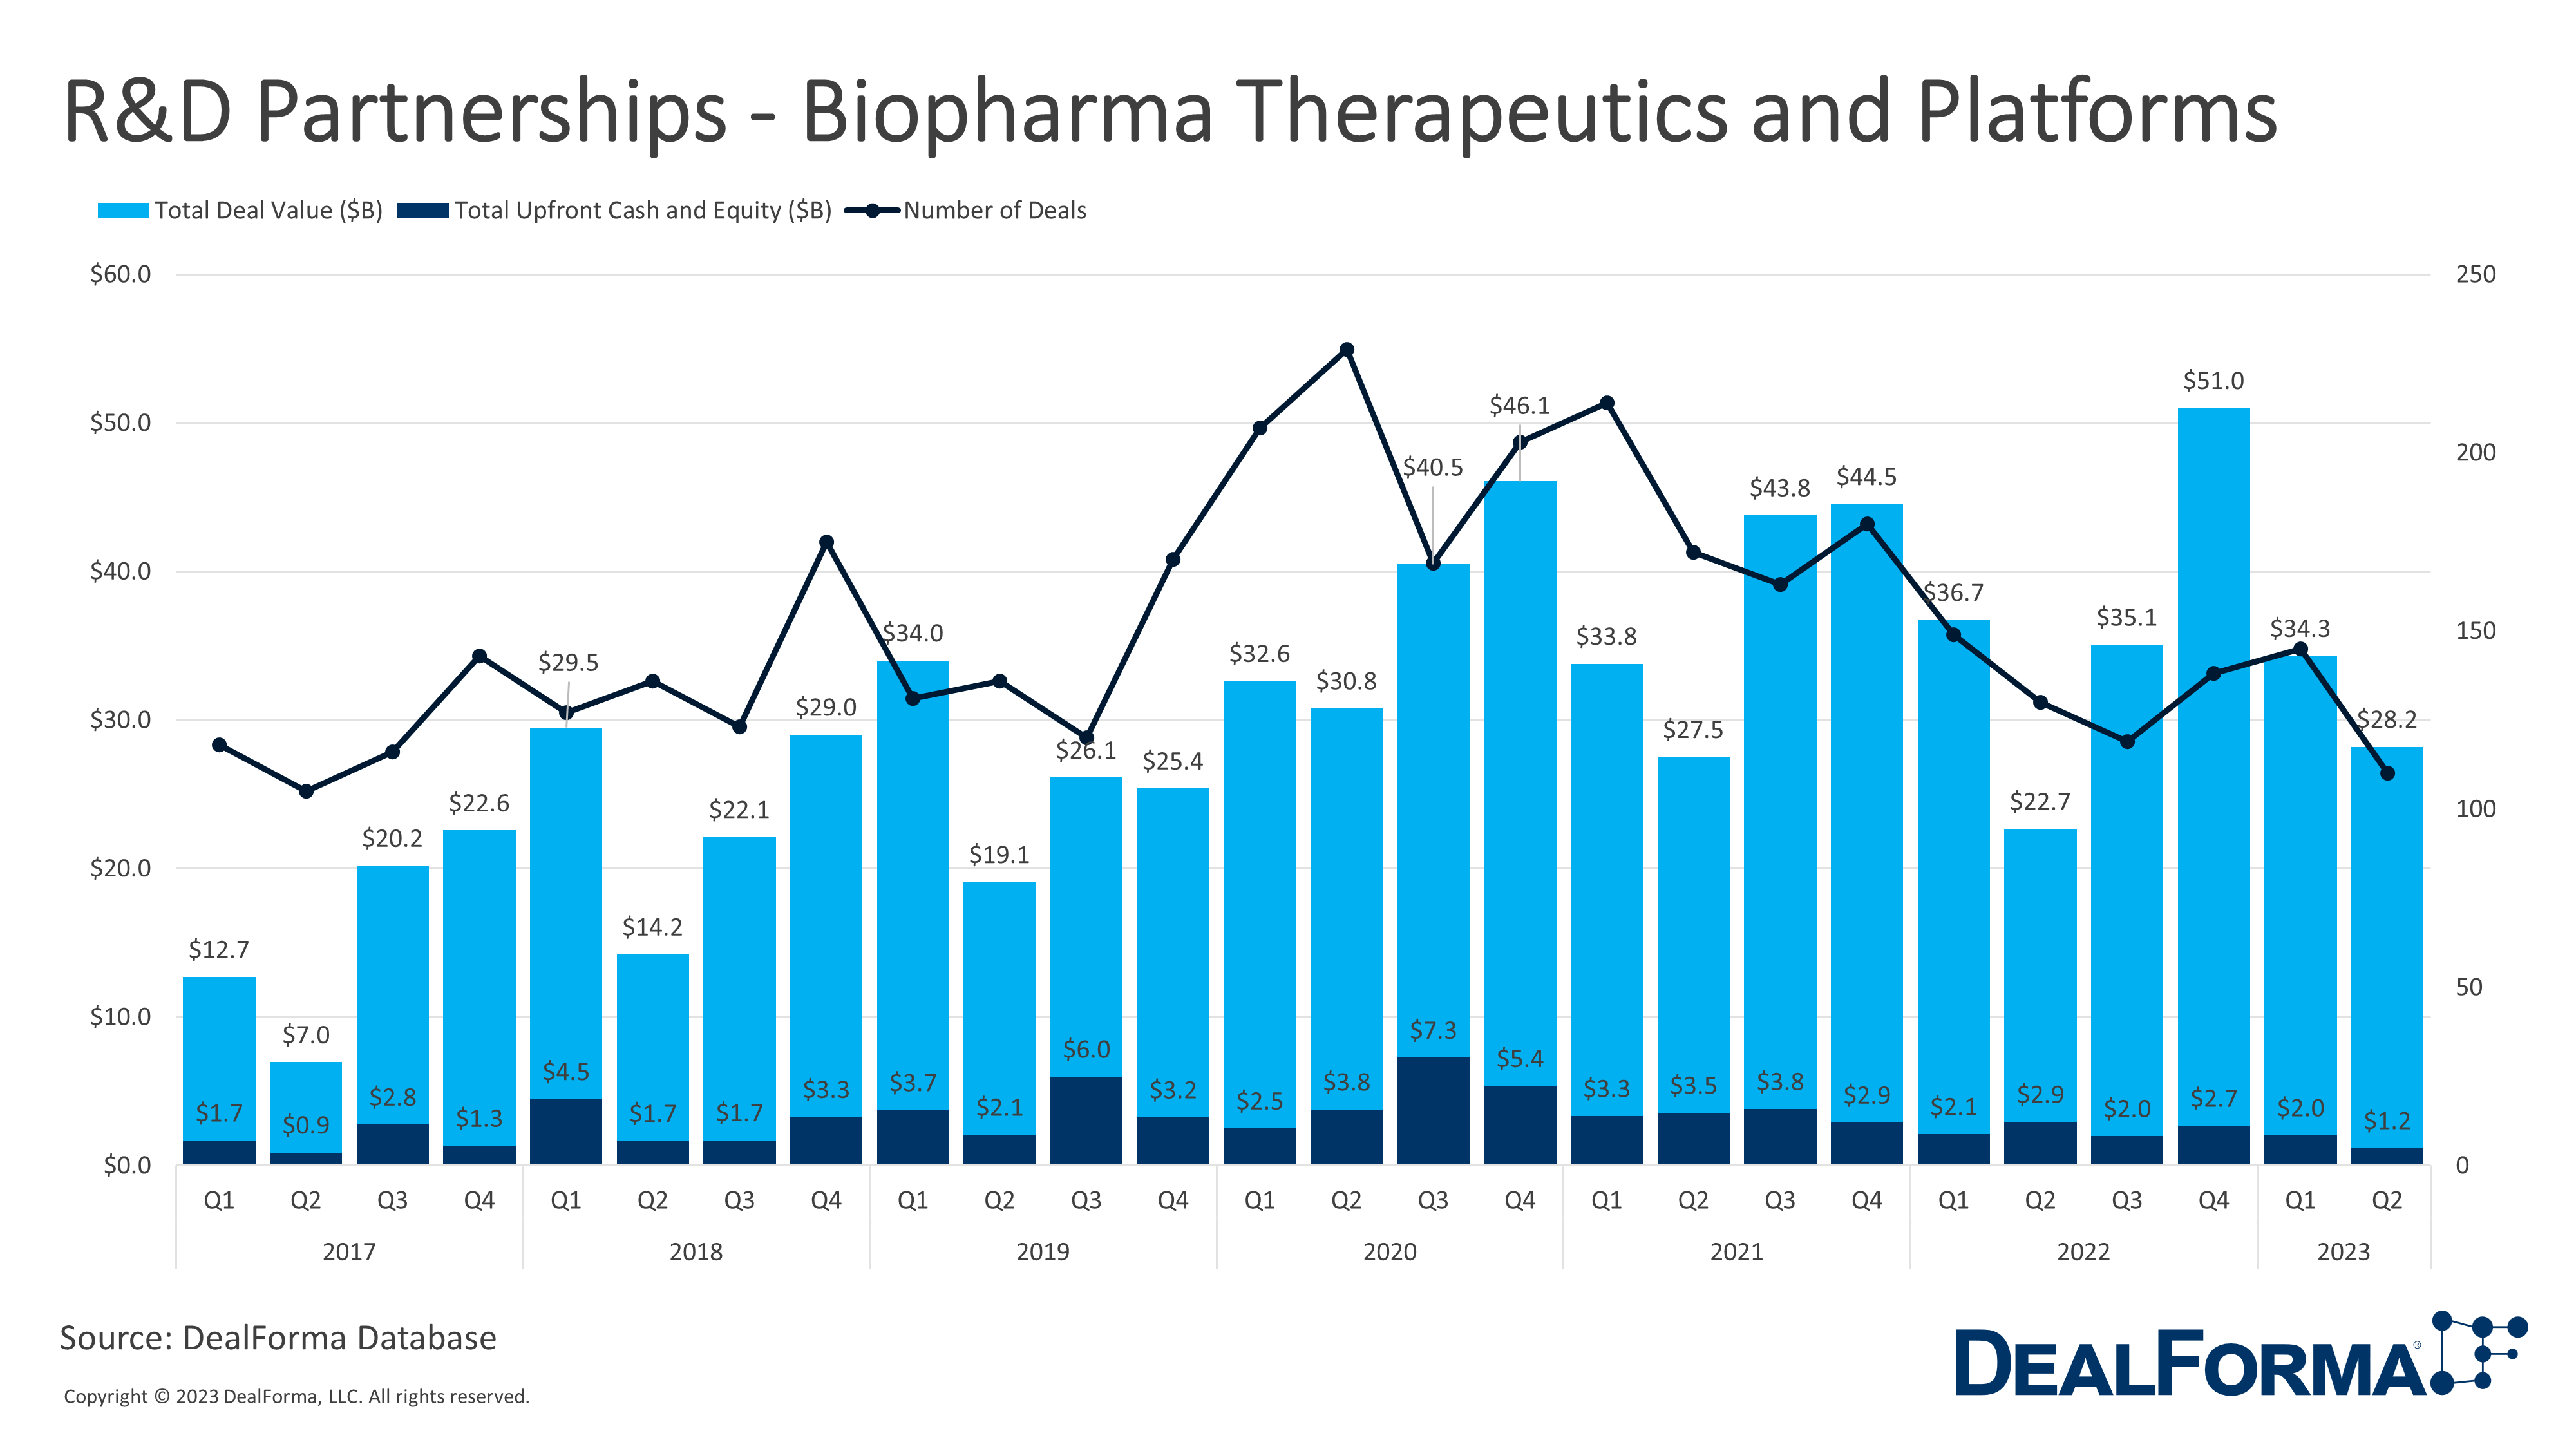 R&D Partnerships - Biopharma Tx and Platforms. DealForma